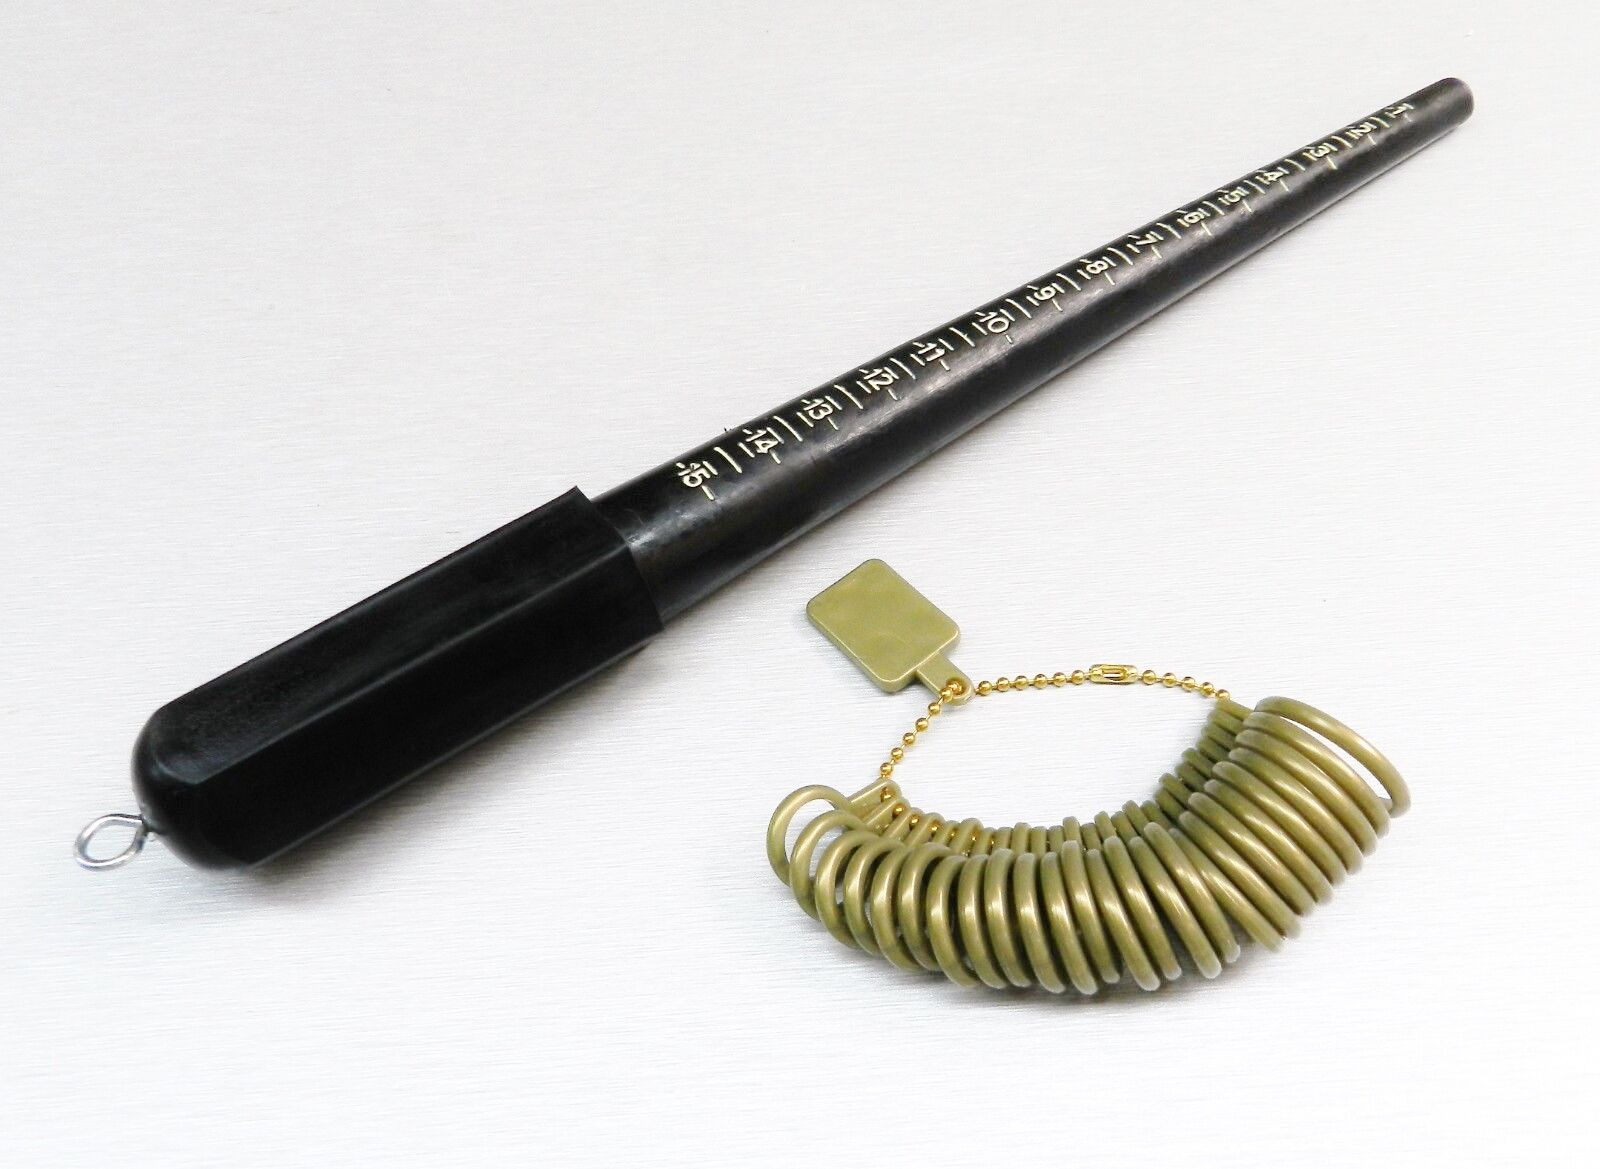 4PCS Ring Mandrel Sizer Tool with Metal Mandrel Finger Sizing Measuring  Stick and Ring Sizer Guage